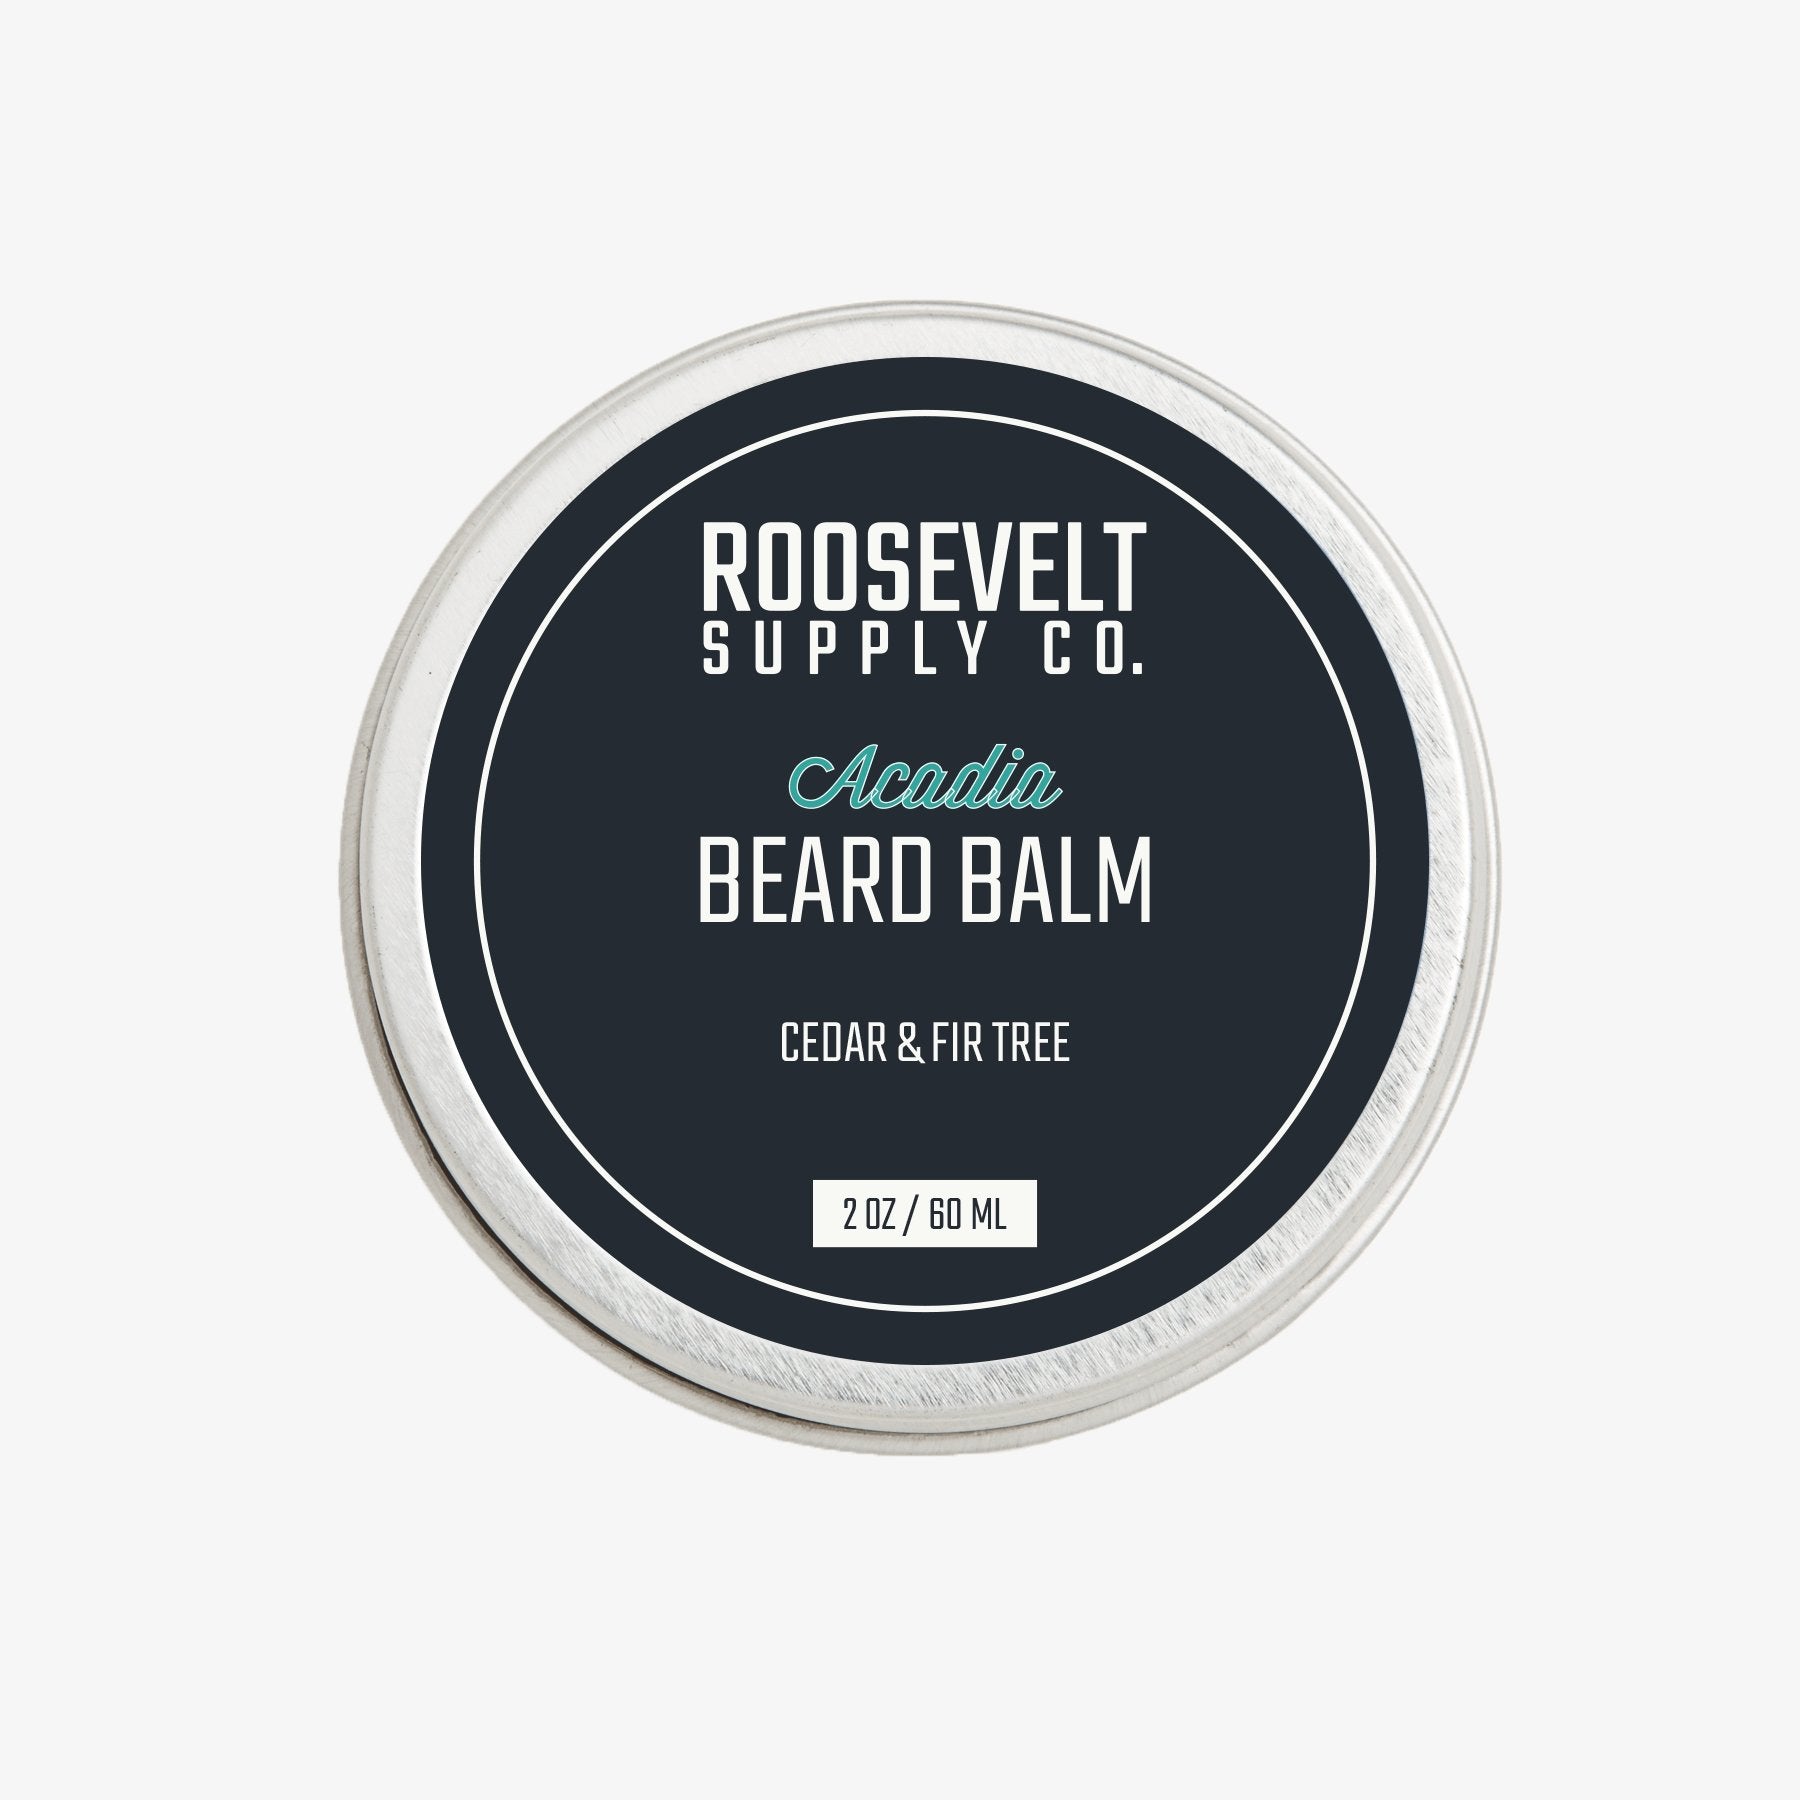 Beard Balm - Roosevelt Supply Co.